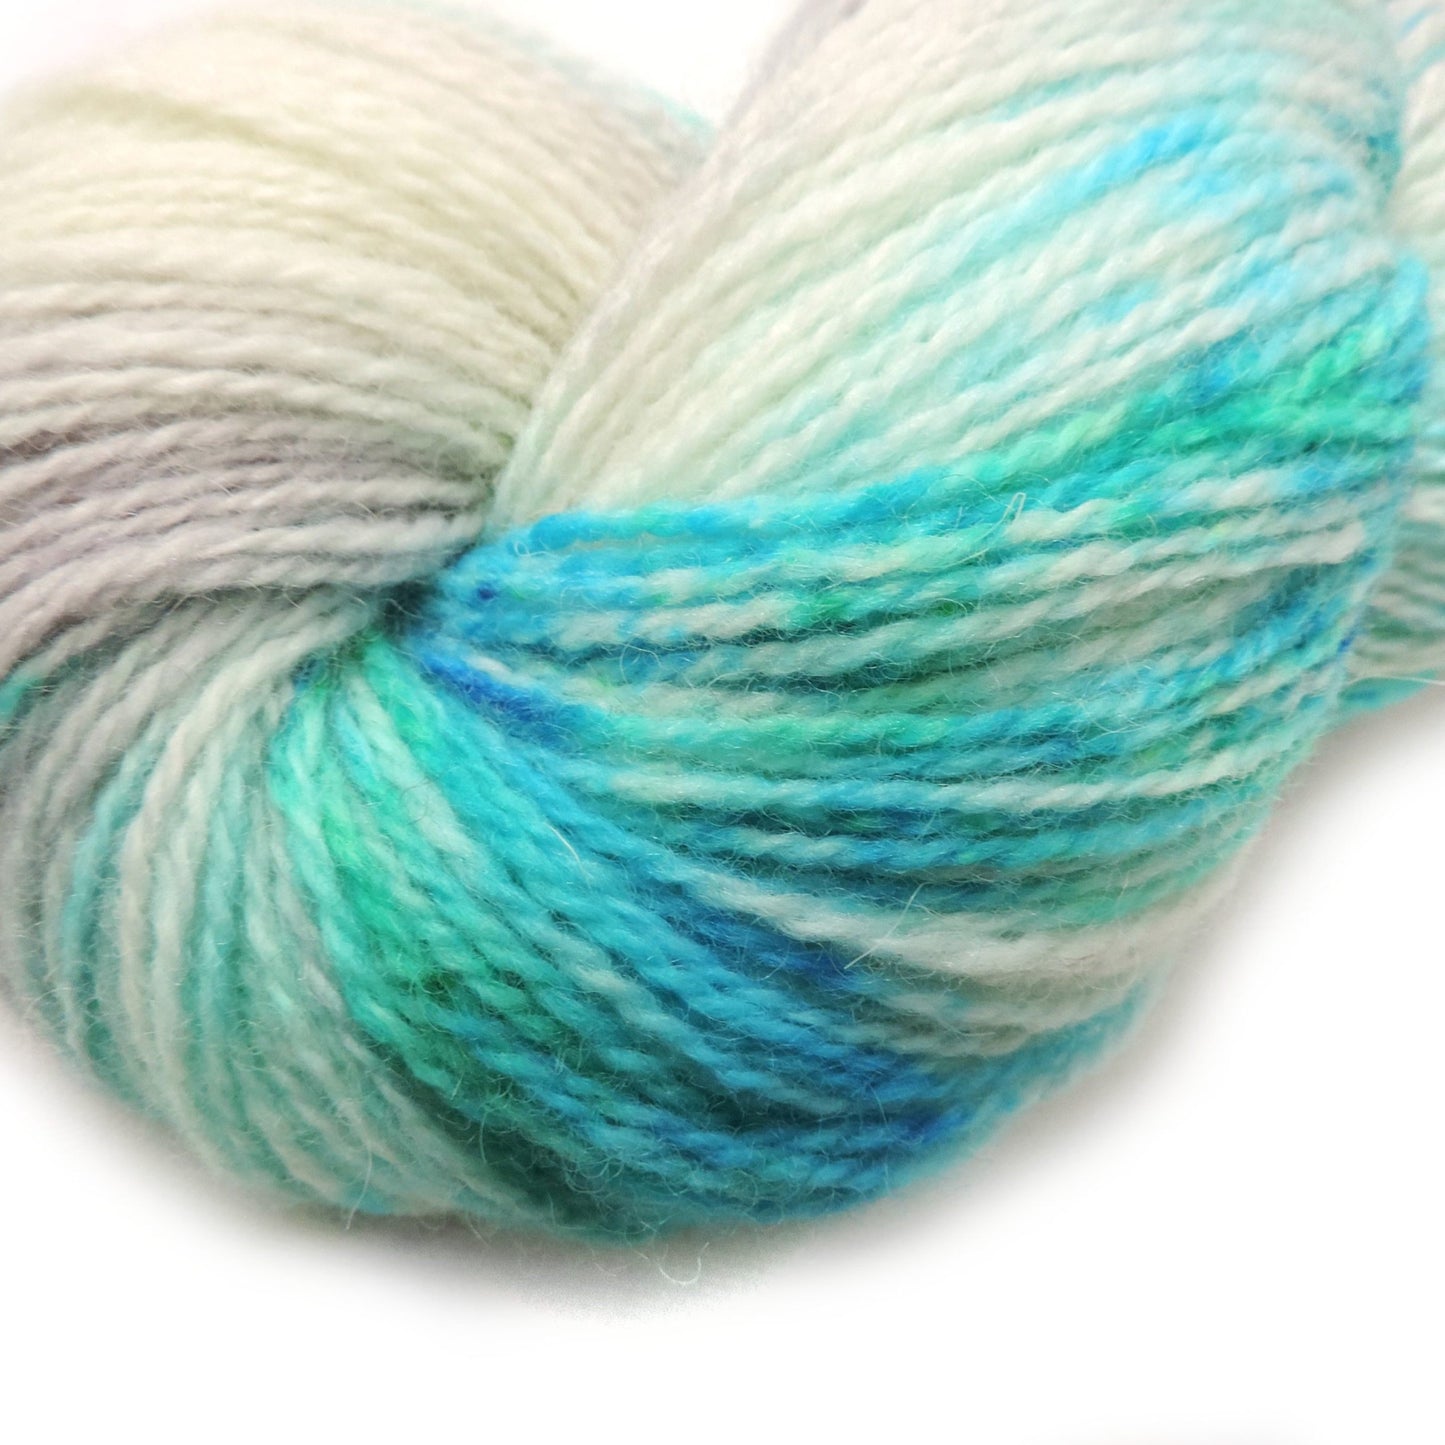 Ice Flow - Trollfjord sock - Hand Dyed Yarn - Speckled Yarn